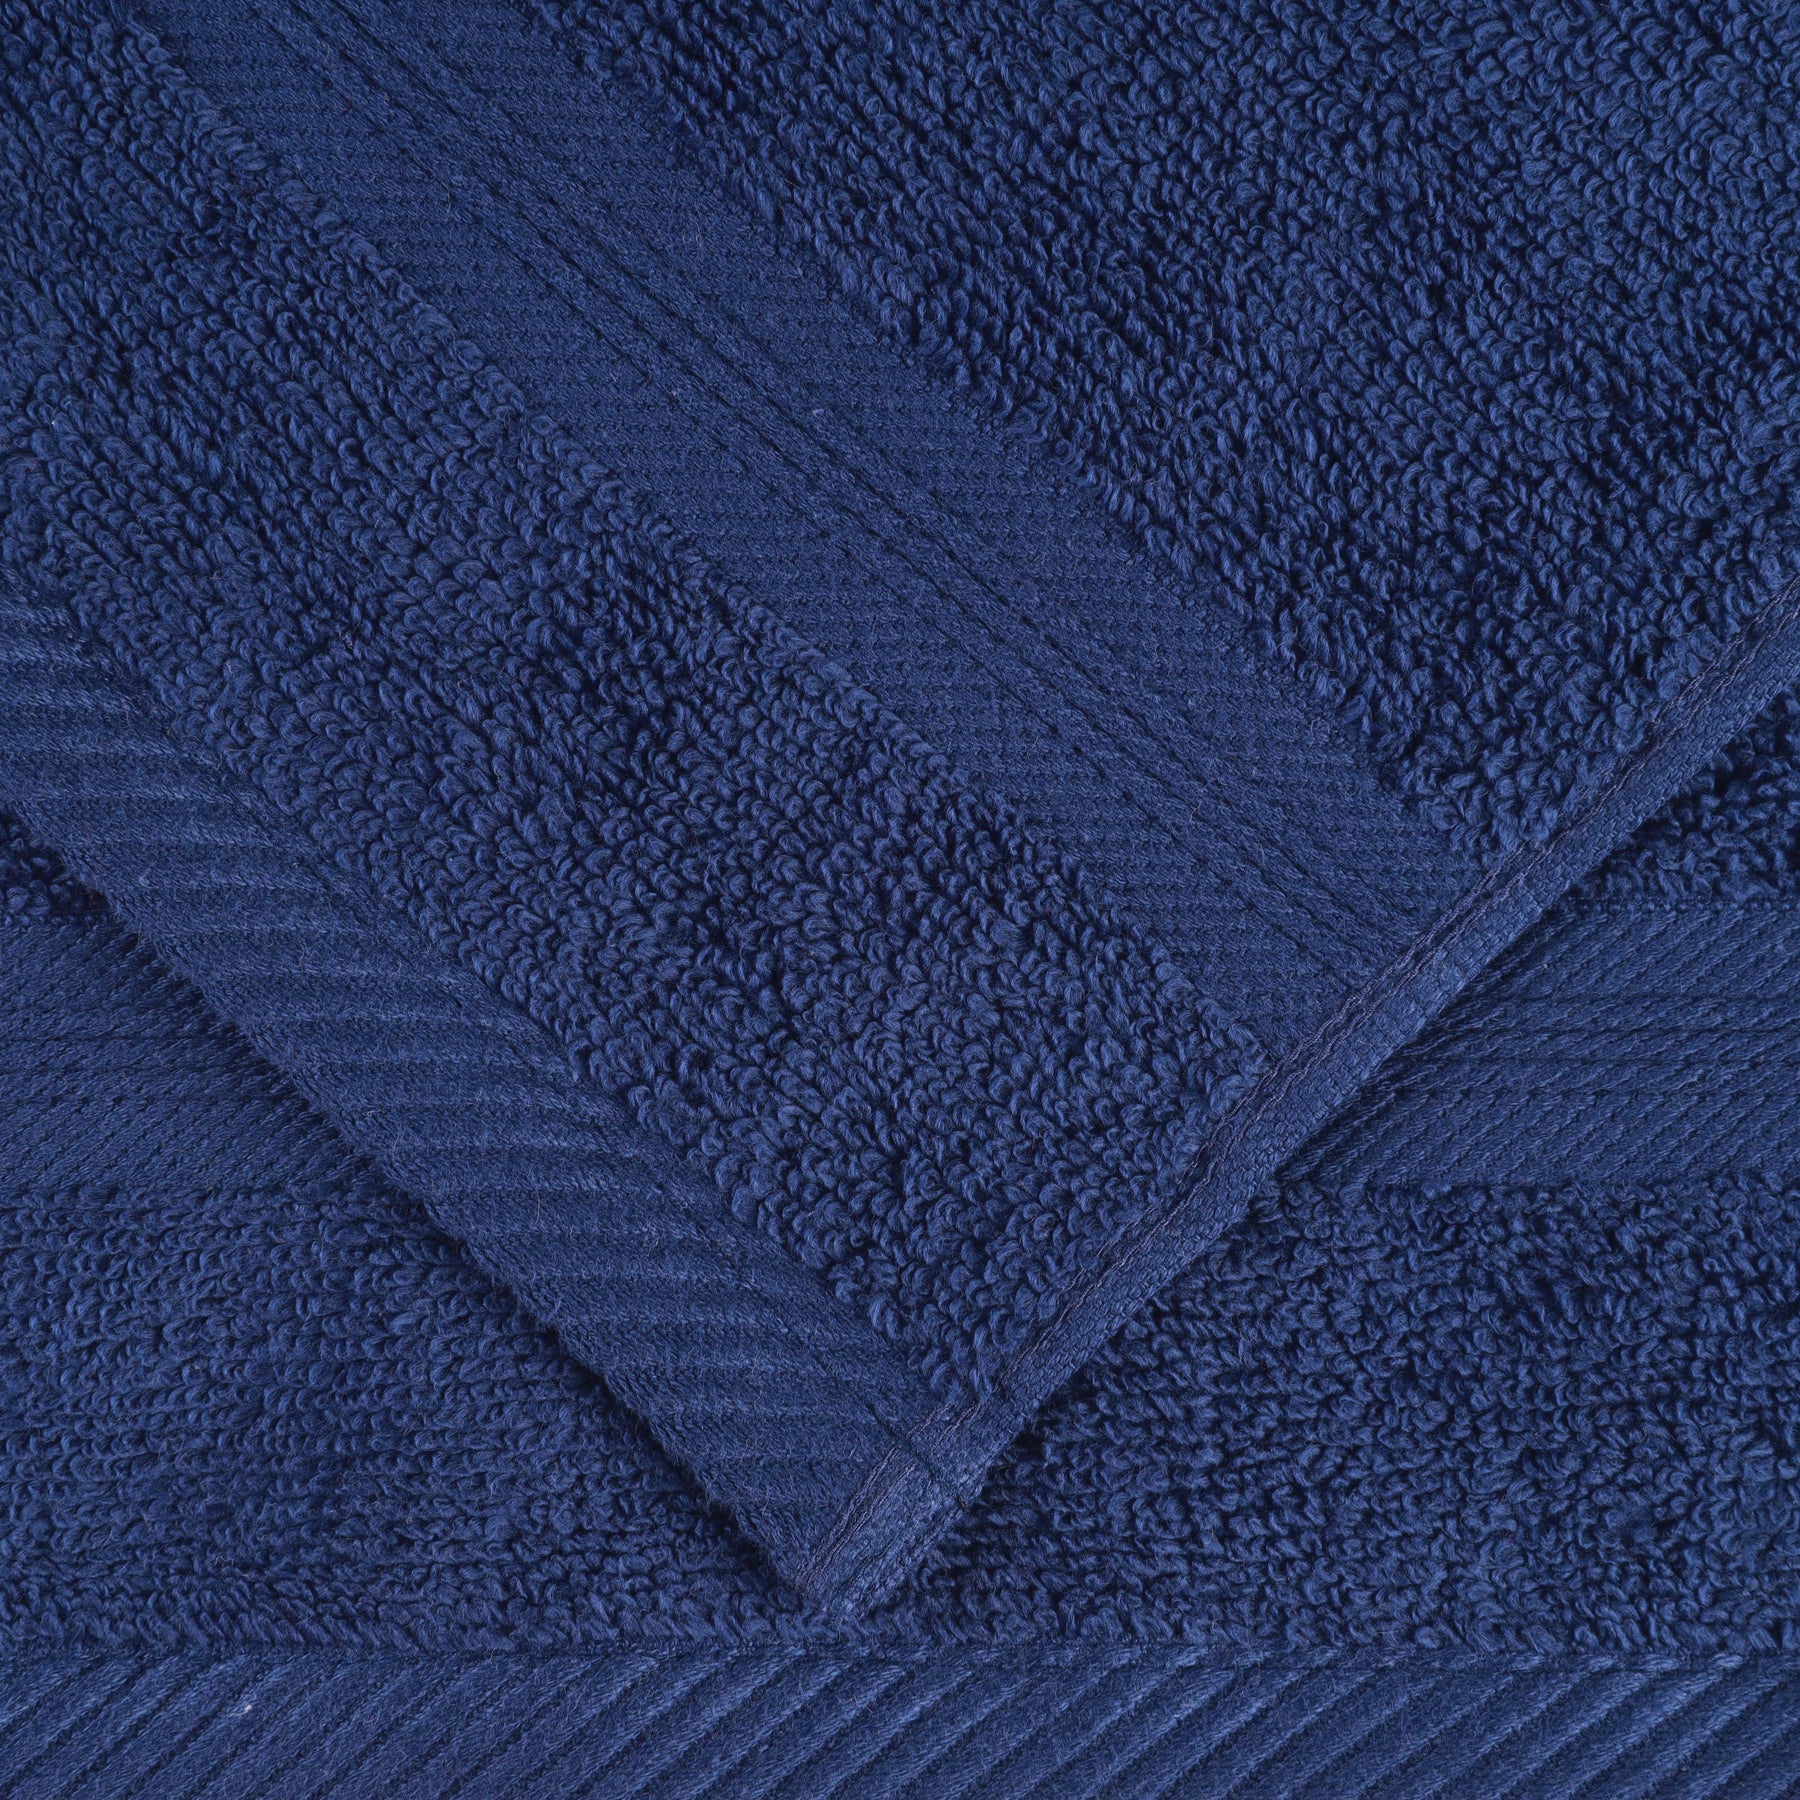 Smart Dry Zero Twist Cotton 3-Piece Assorted Towel Set - Navy Blue